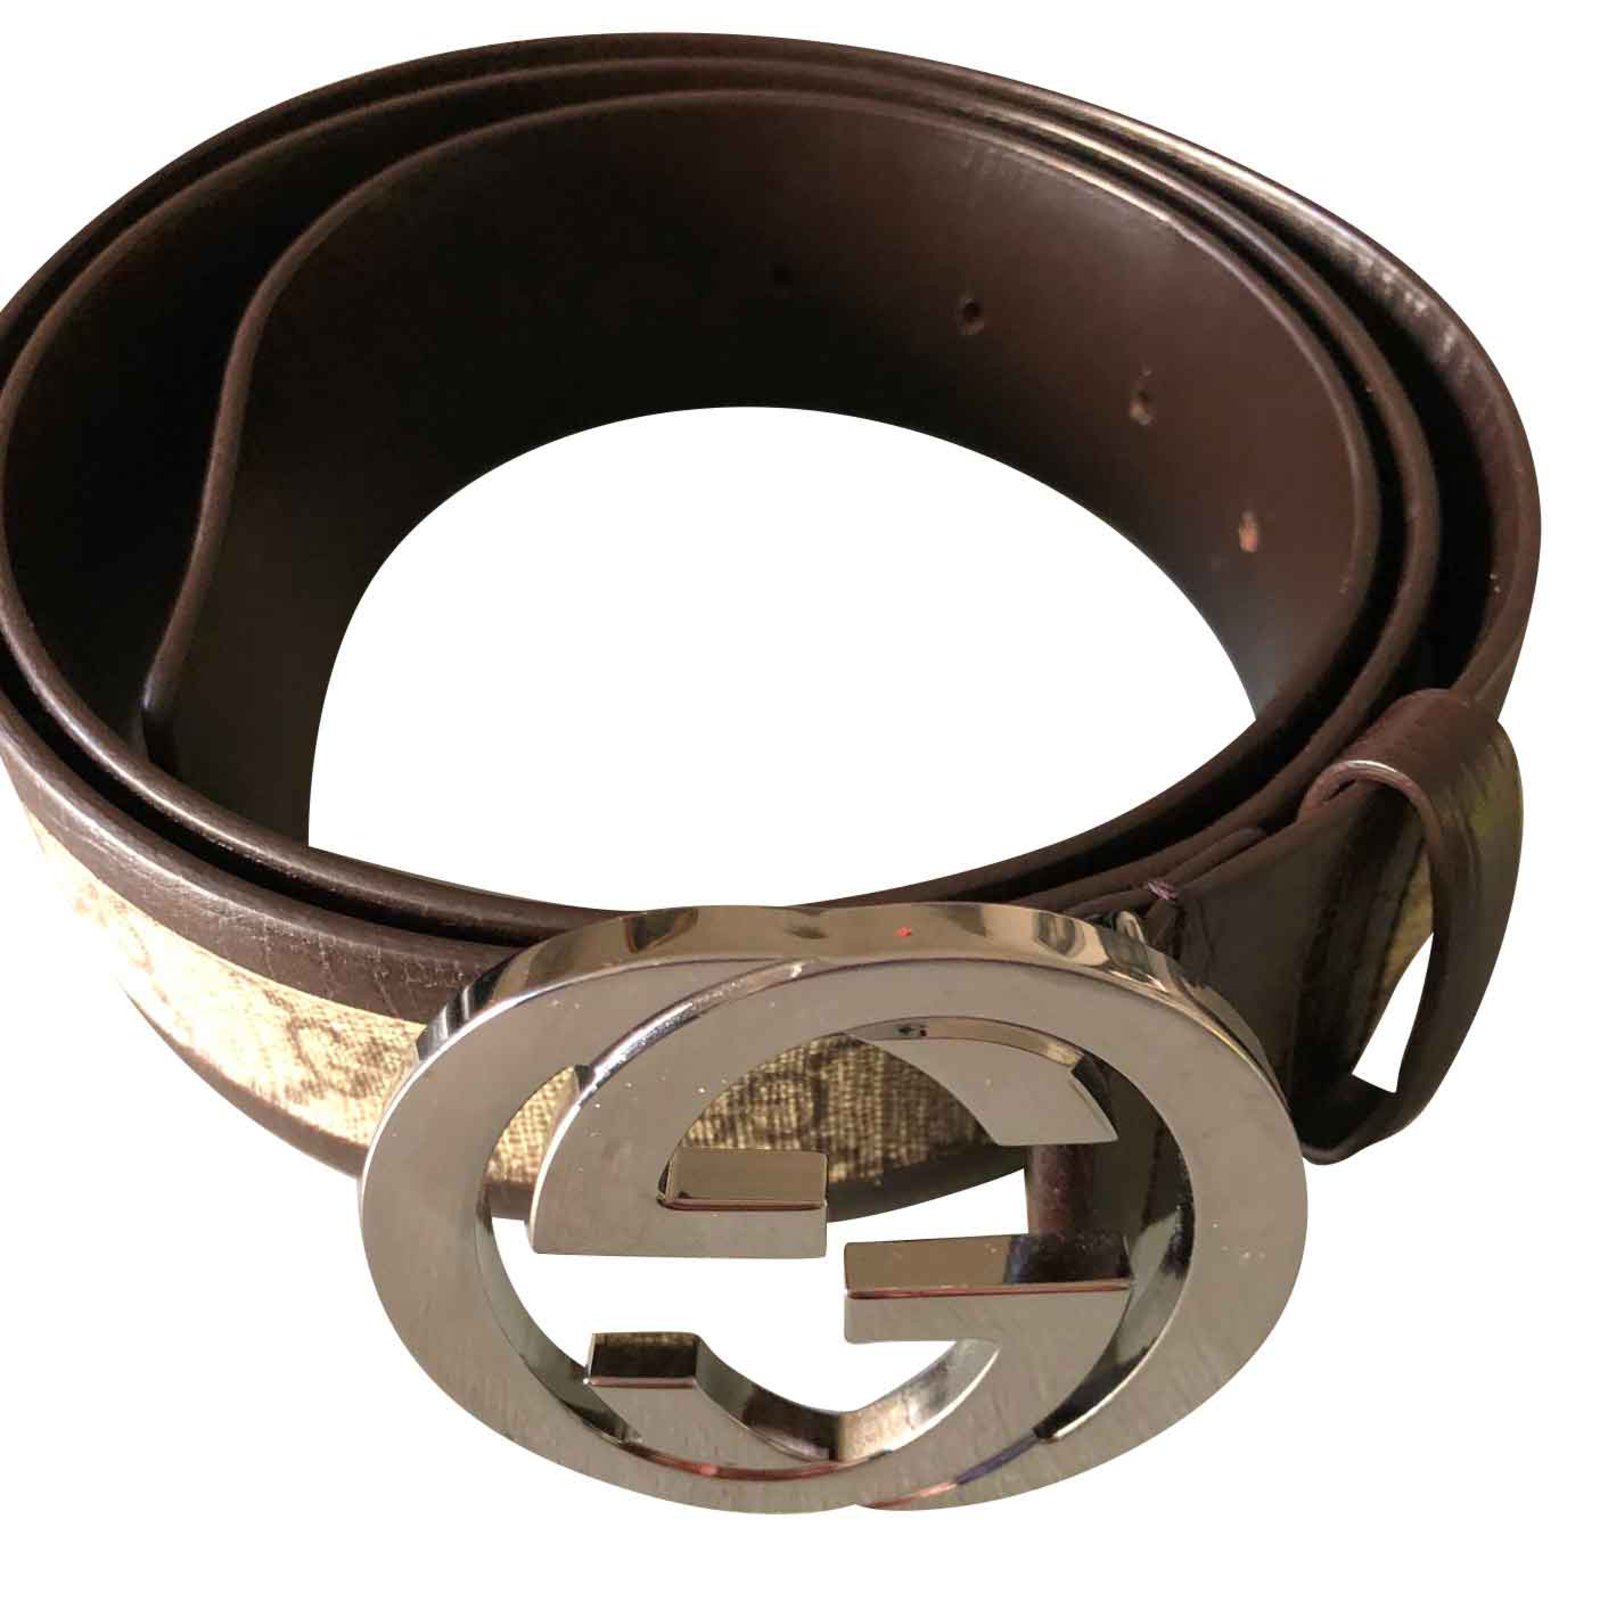 gucci supreme leather belt